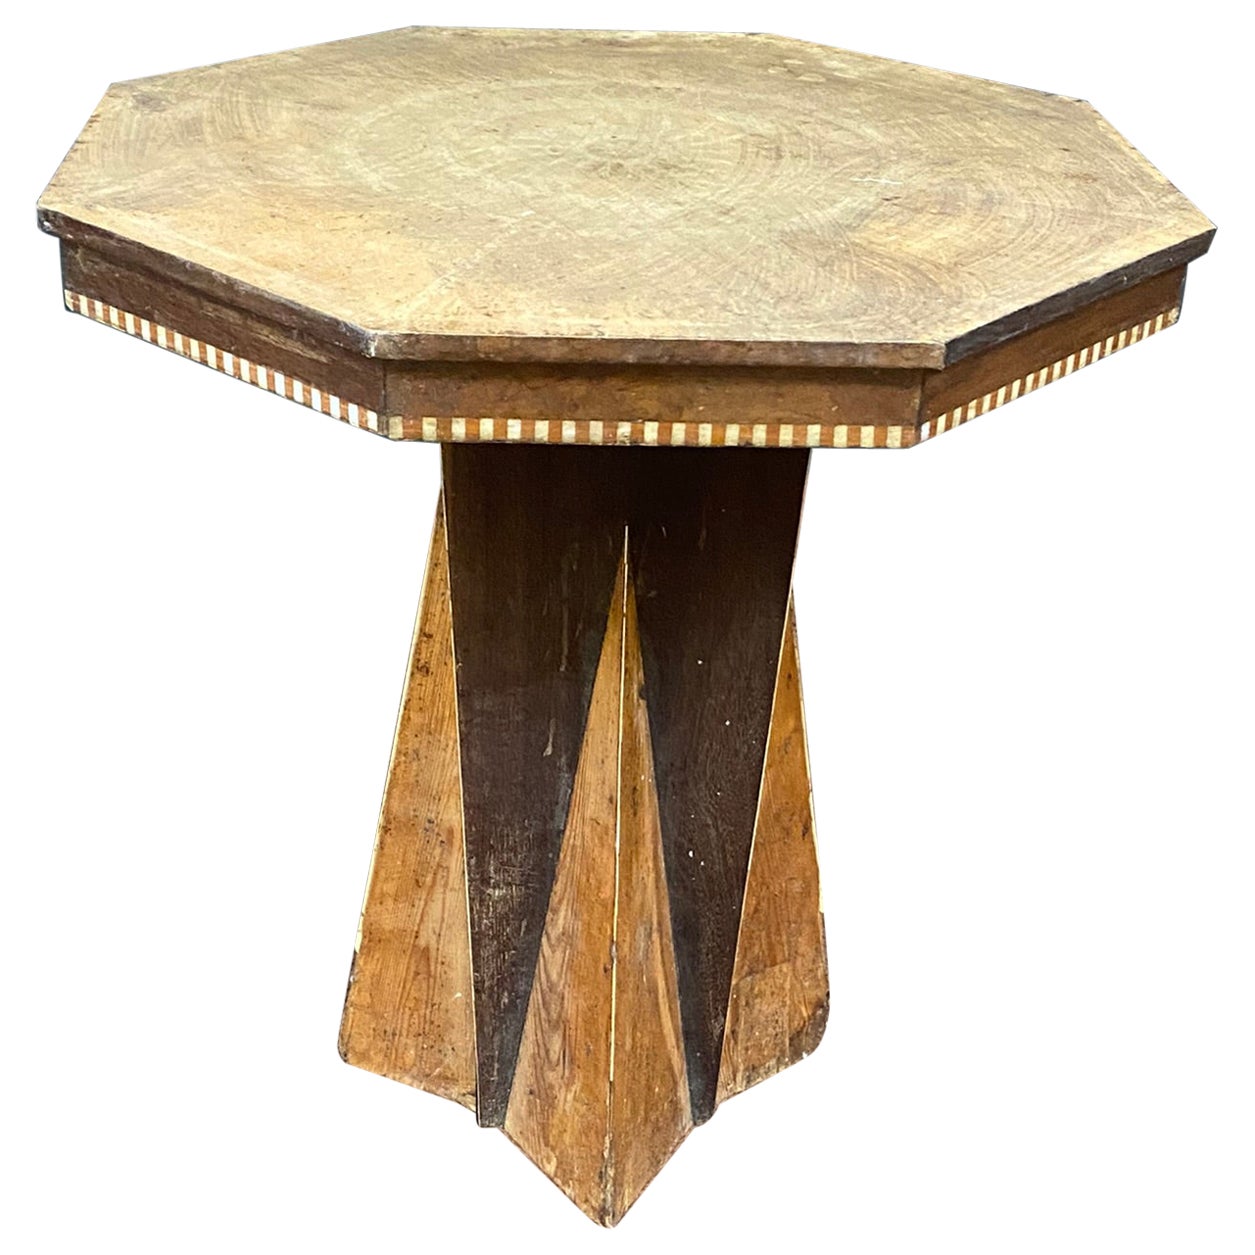 Interesting Art Deco Africanist Pedestal Table, circa 1930 For Sale